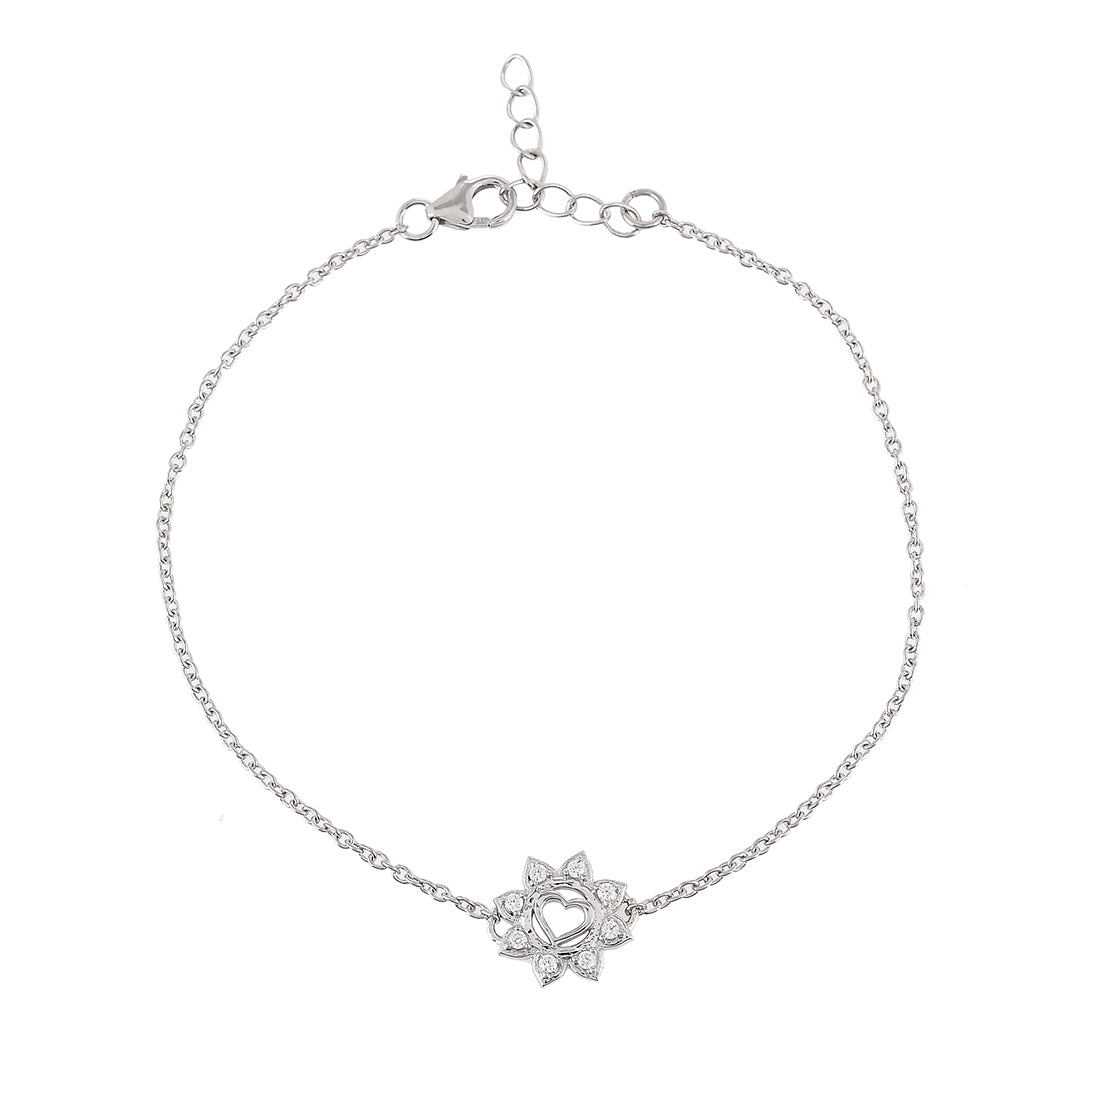 Women's Floral Heart Chain Bracelet - Voylla